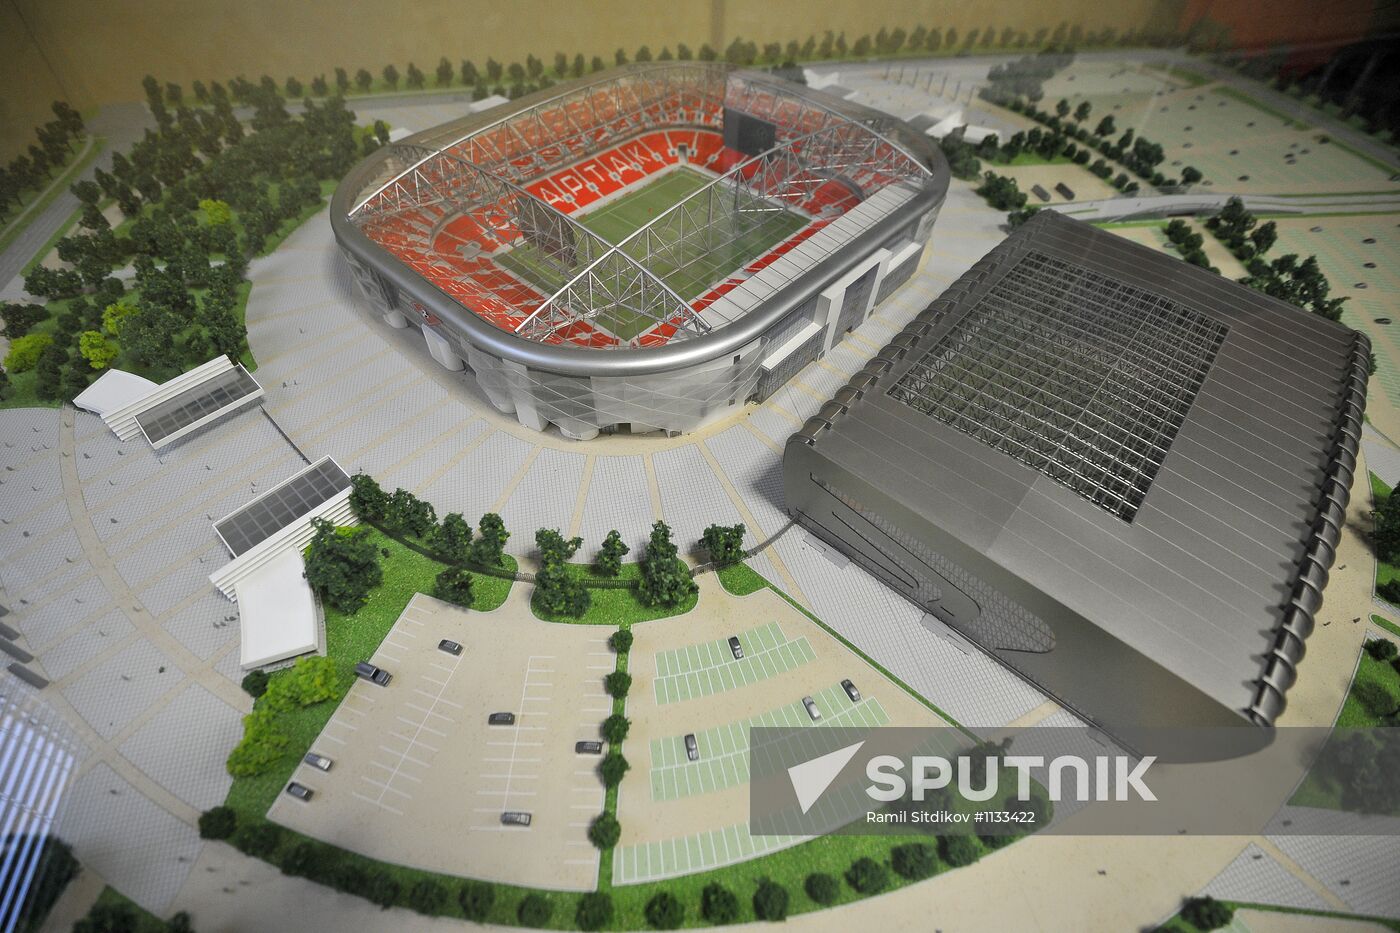 Construction of Spartak stadium